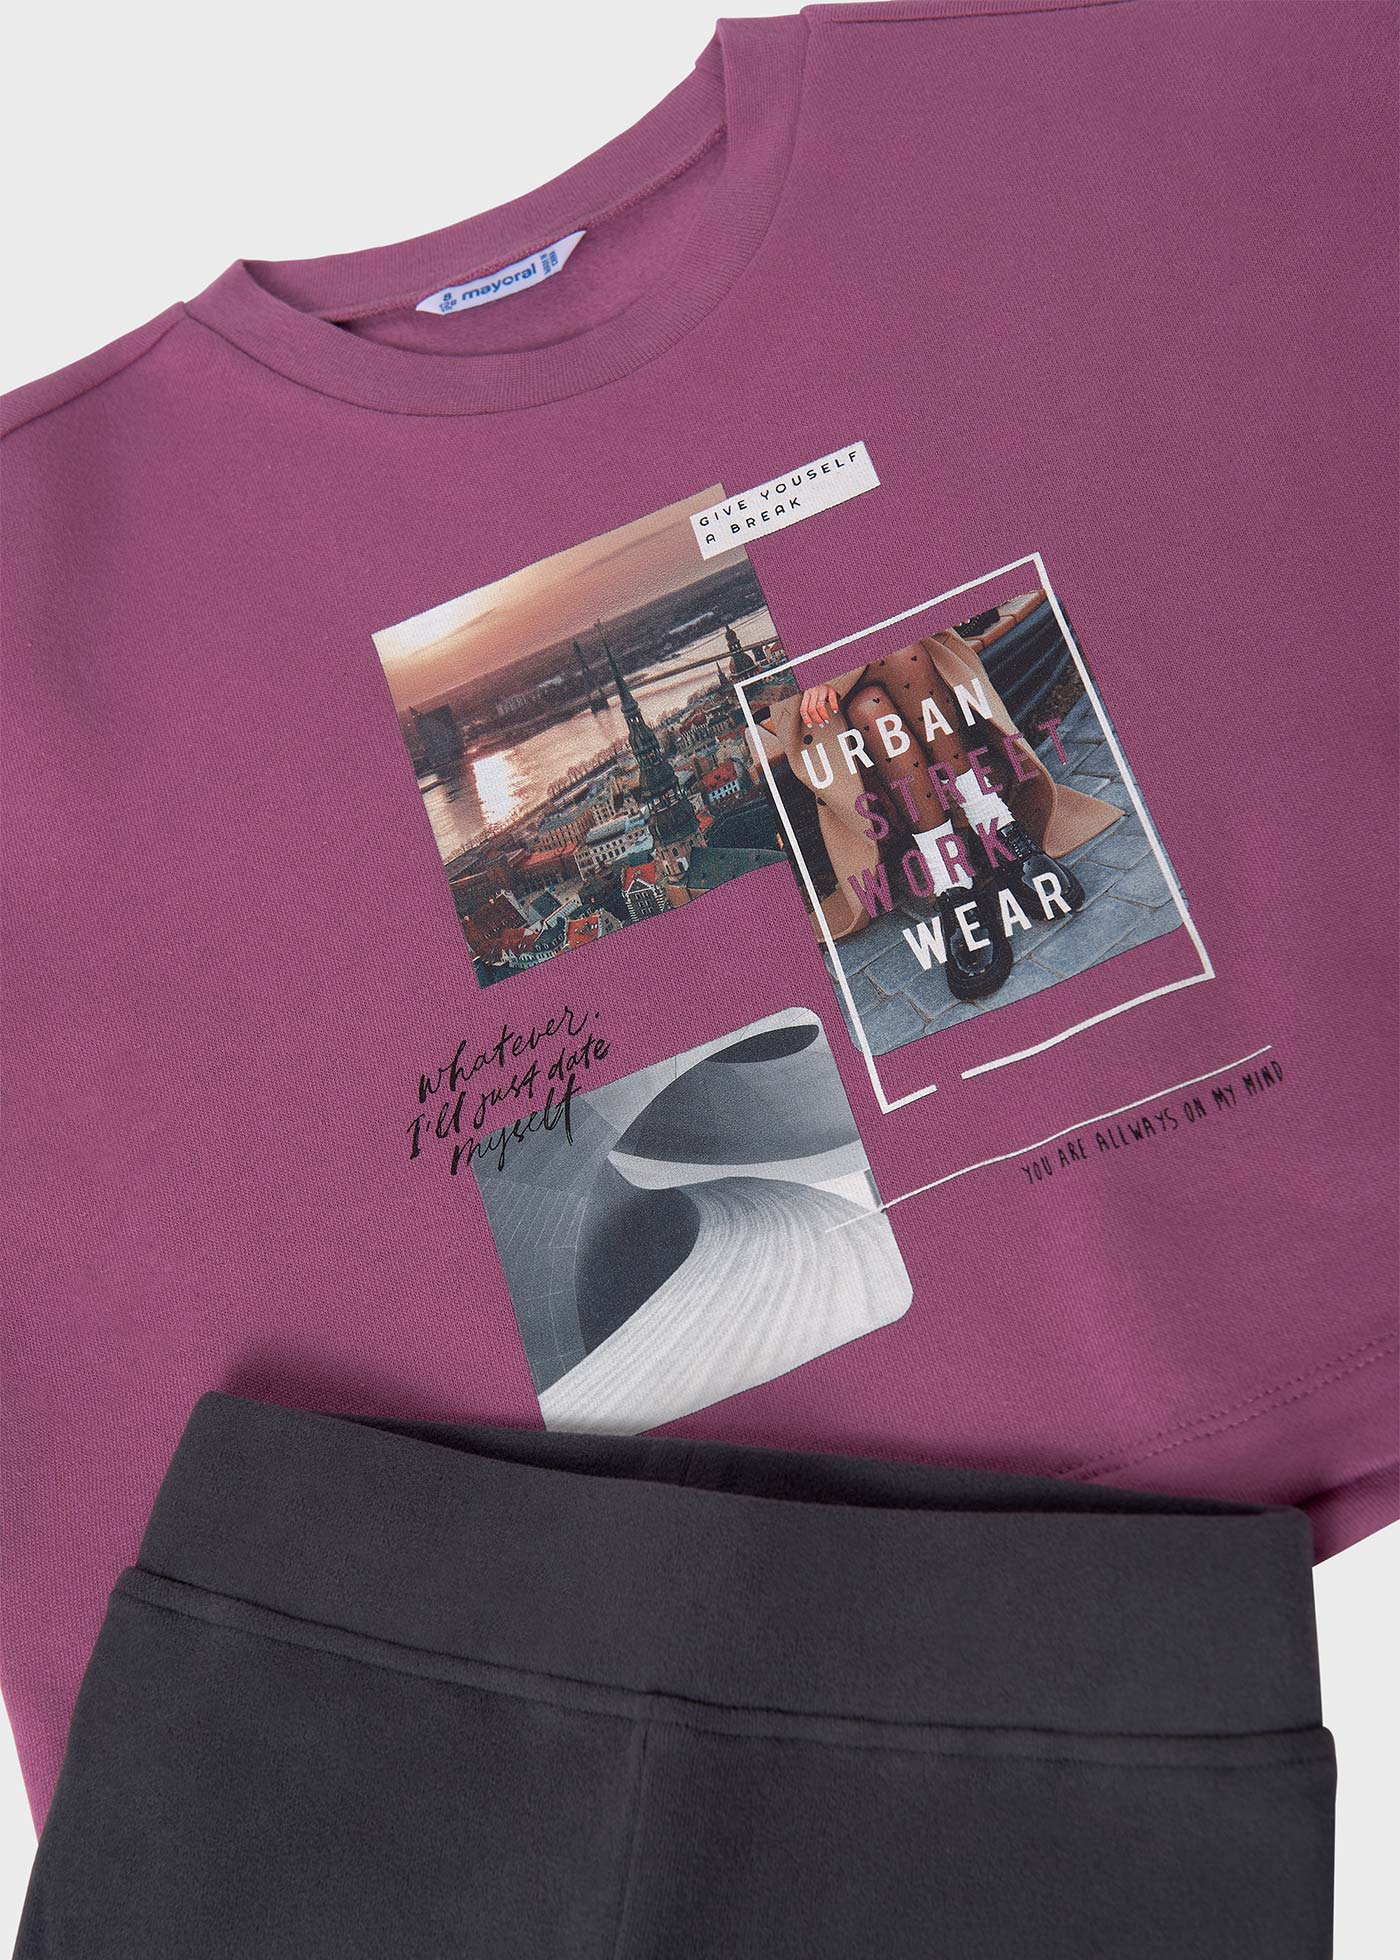 Set of leggings and printed sweatshirt for girls